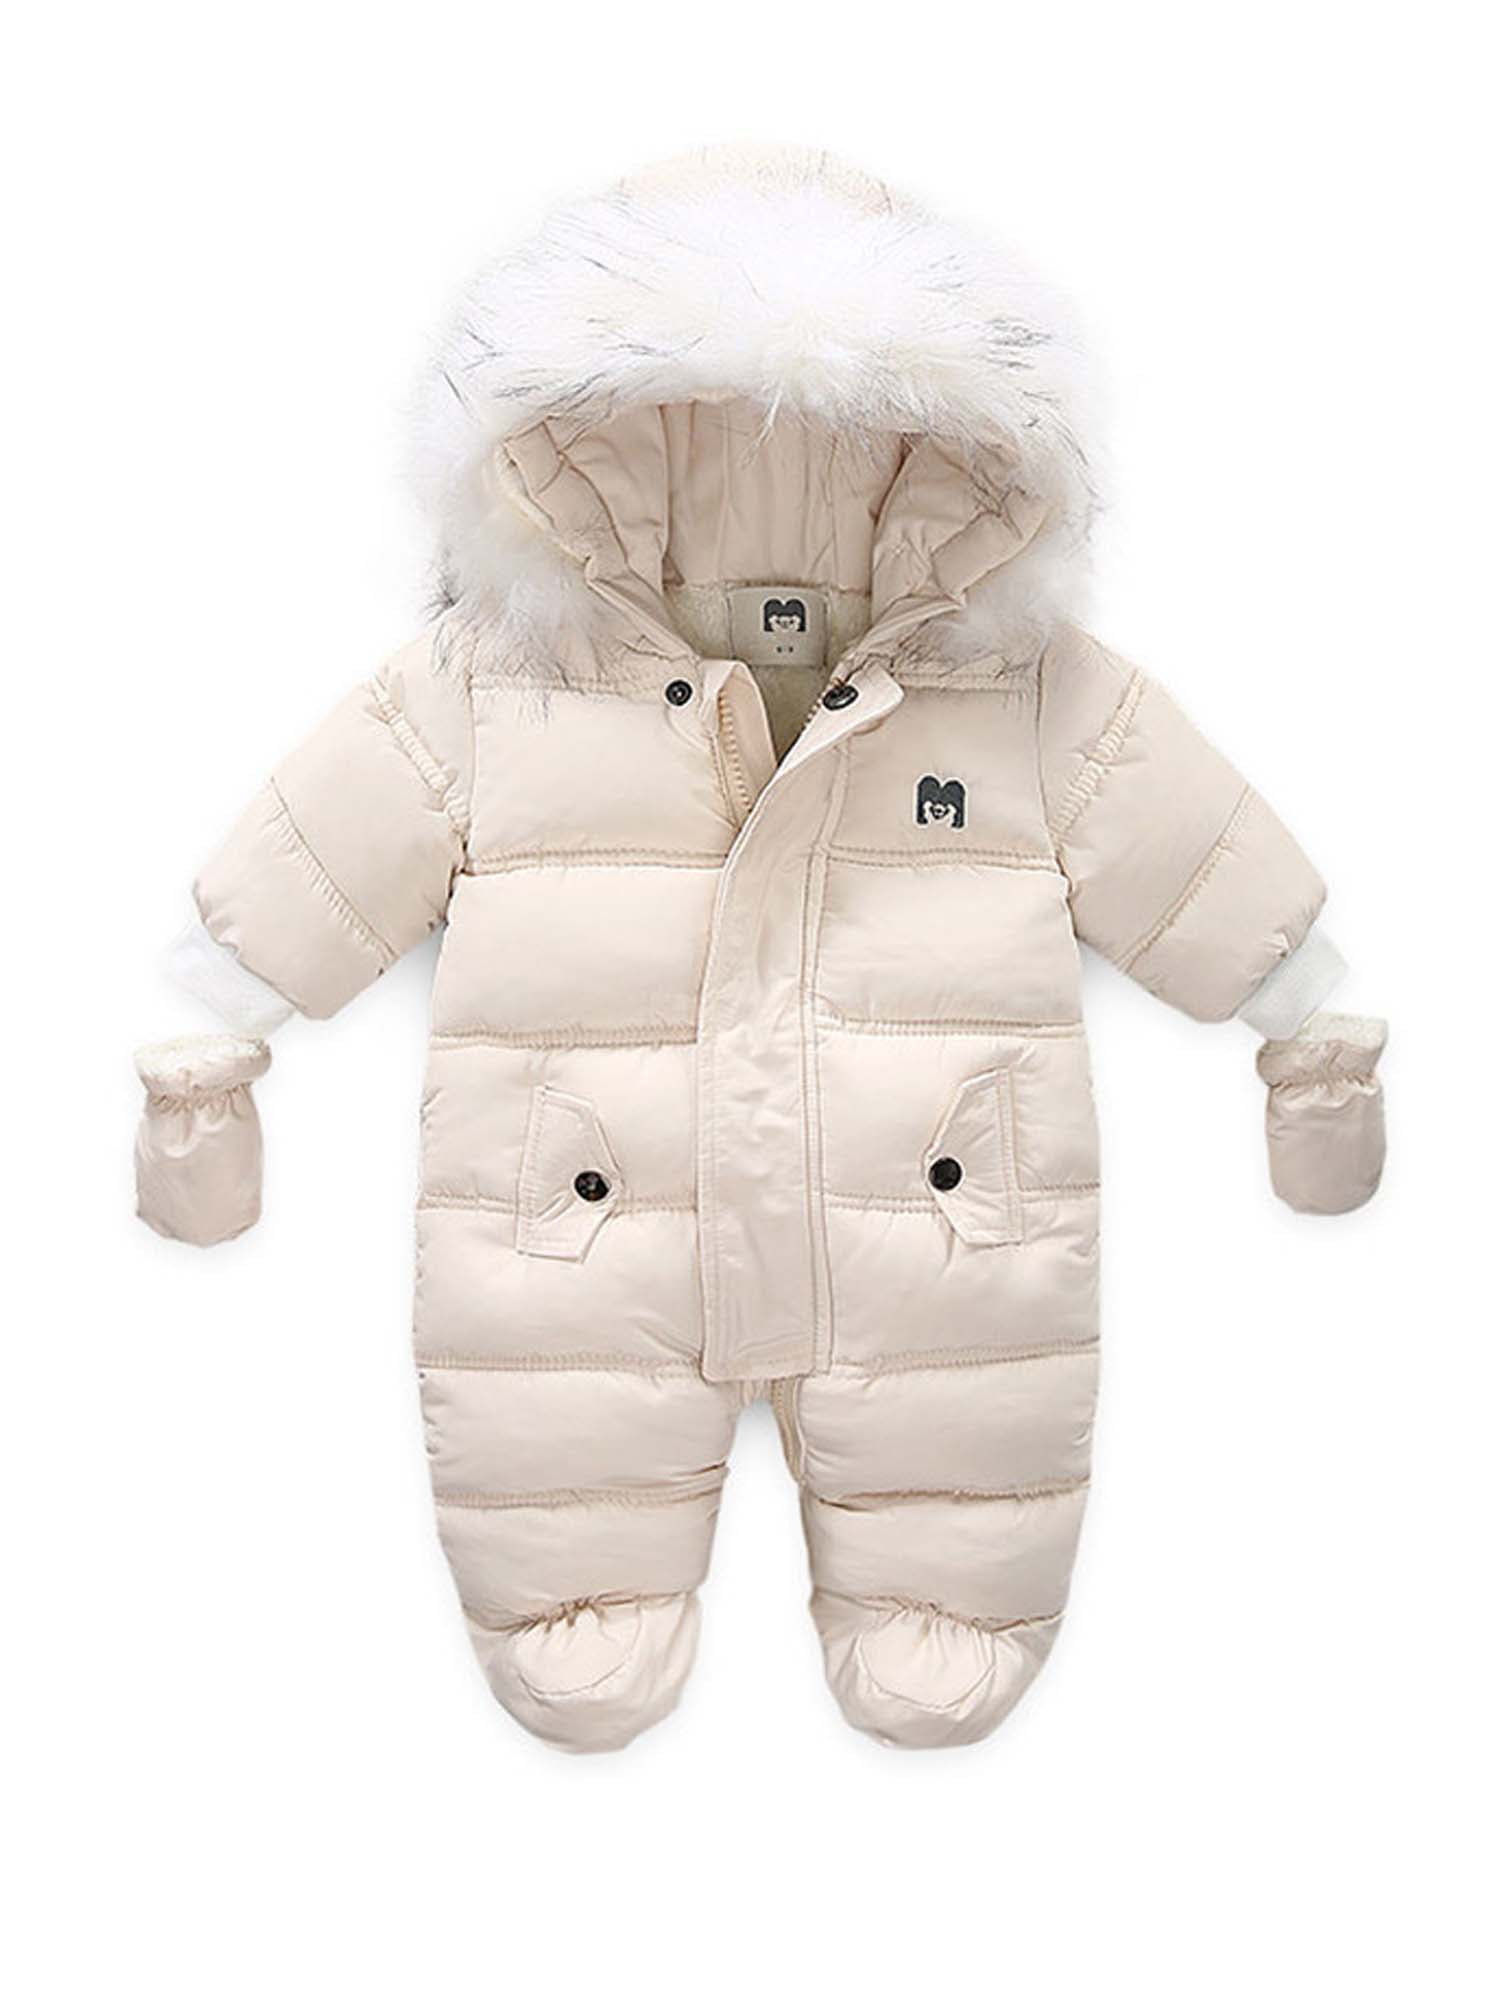 AceAcr Unisex Baby Hooded Winter Snowsuit Infant Warm Puffer Jumpsuit Romper Jacket